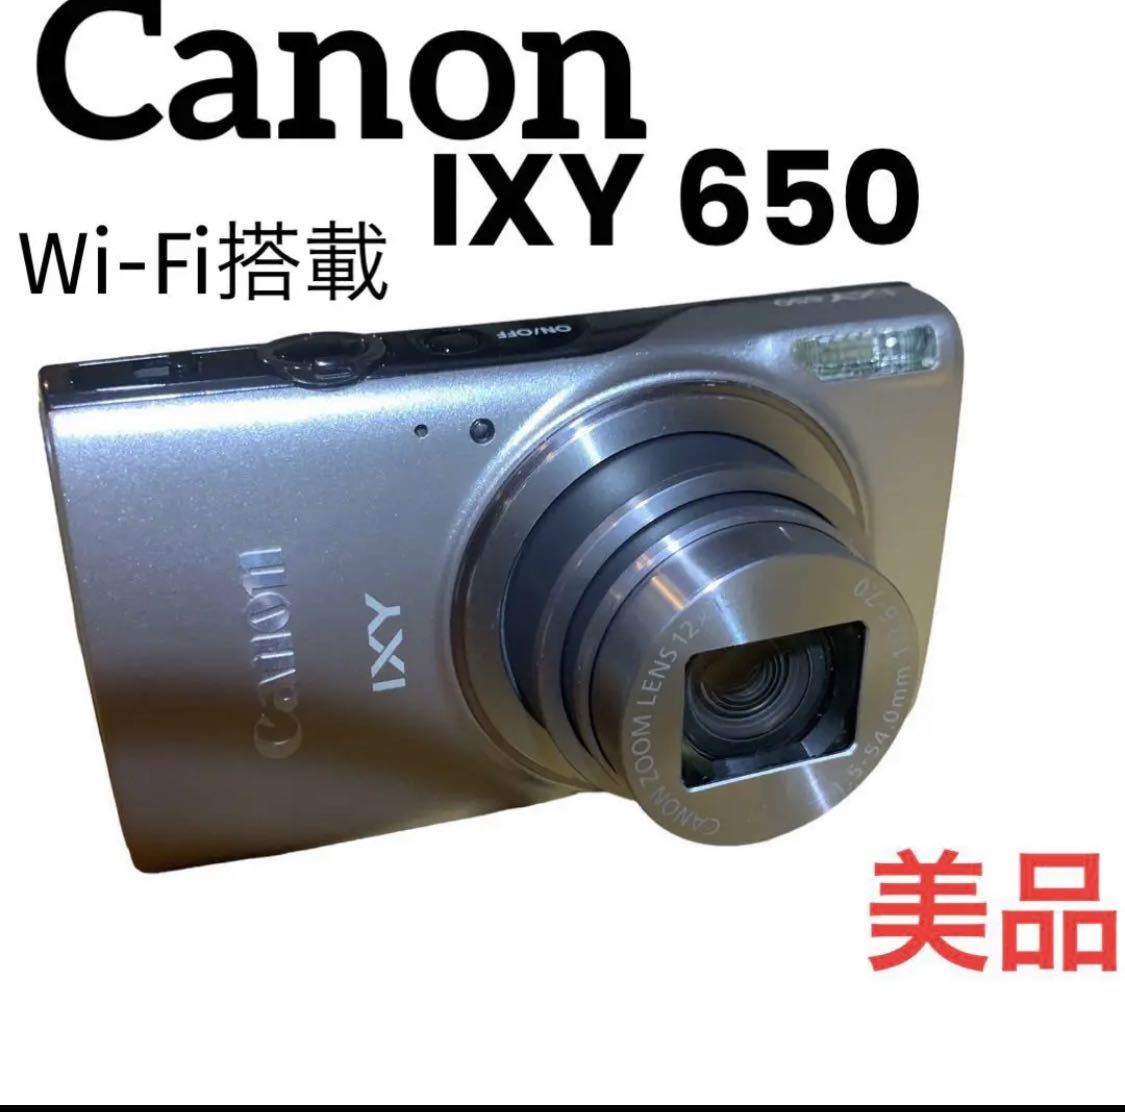 Canon IXY650 デジタルカメラ WiFi対応 - デジタルカメラ